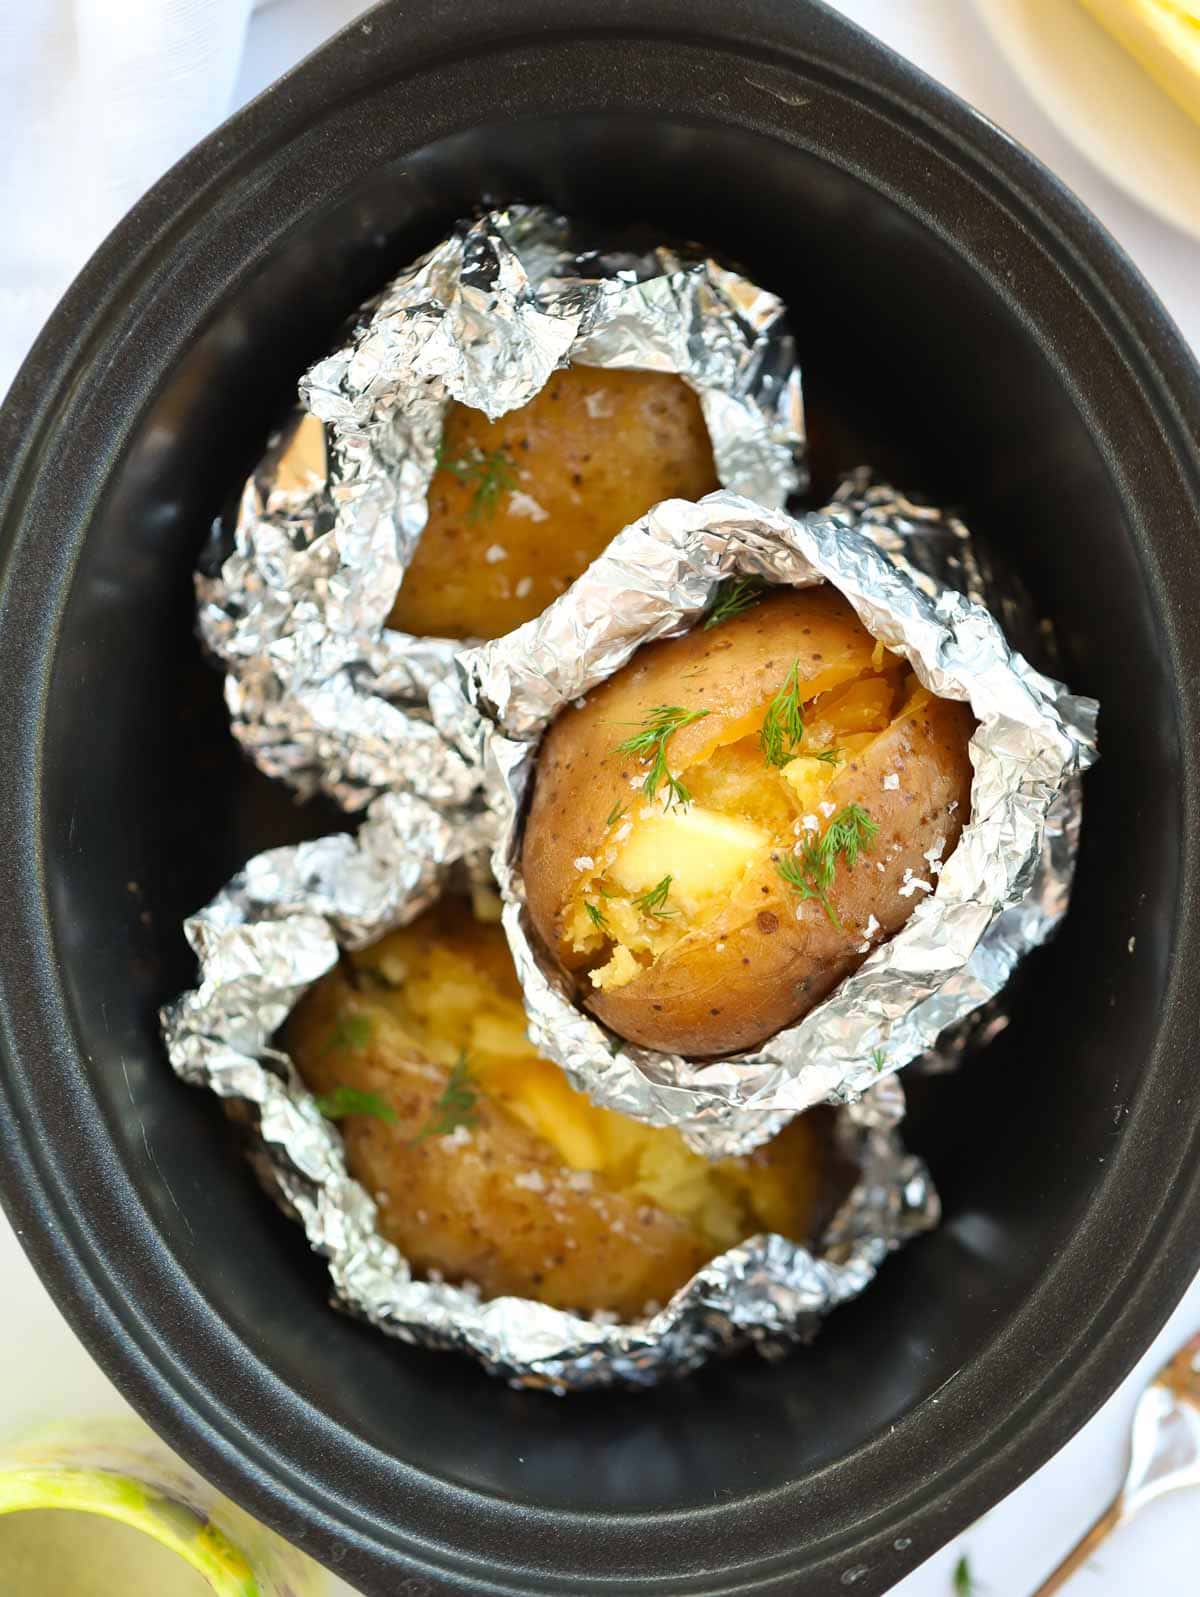 https://www.tamingtwins.com/wp-content/uploads/2022/06/slow-cooker-baked-potatoes-2.jpg